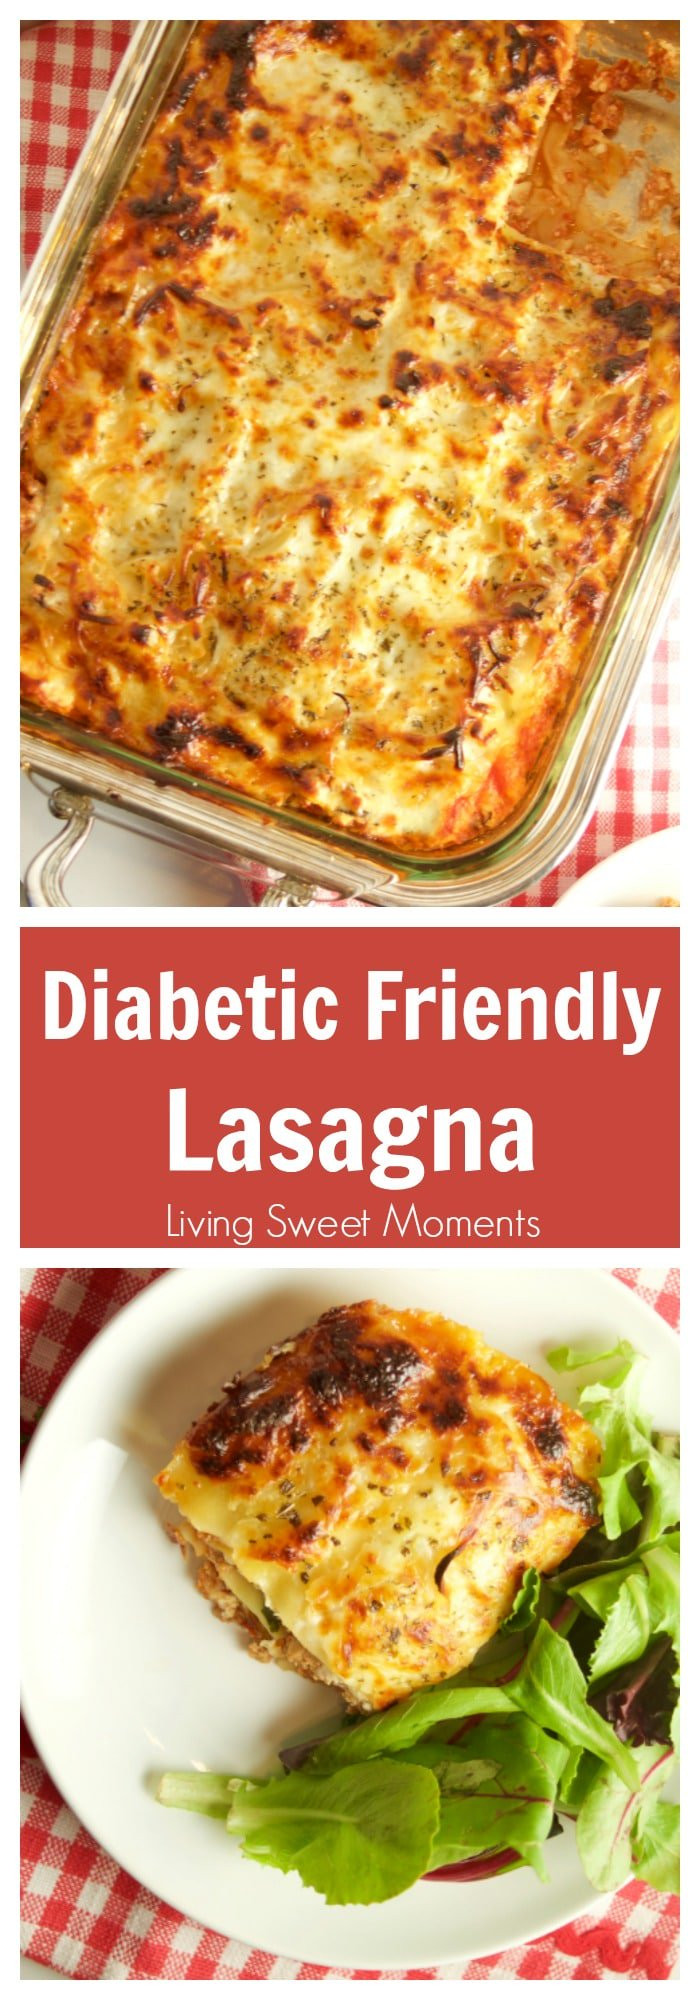 Diabetic Ground Turkey Recipes
 Diabetic Lasagna Recipe Living Sweet Moments